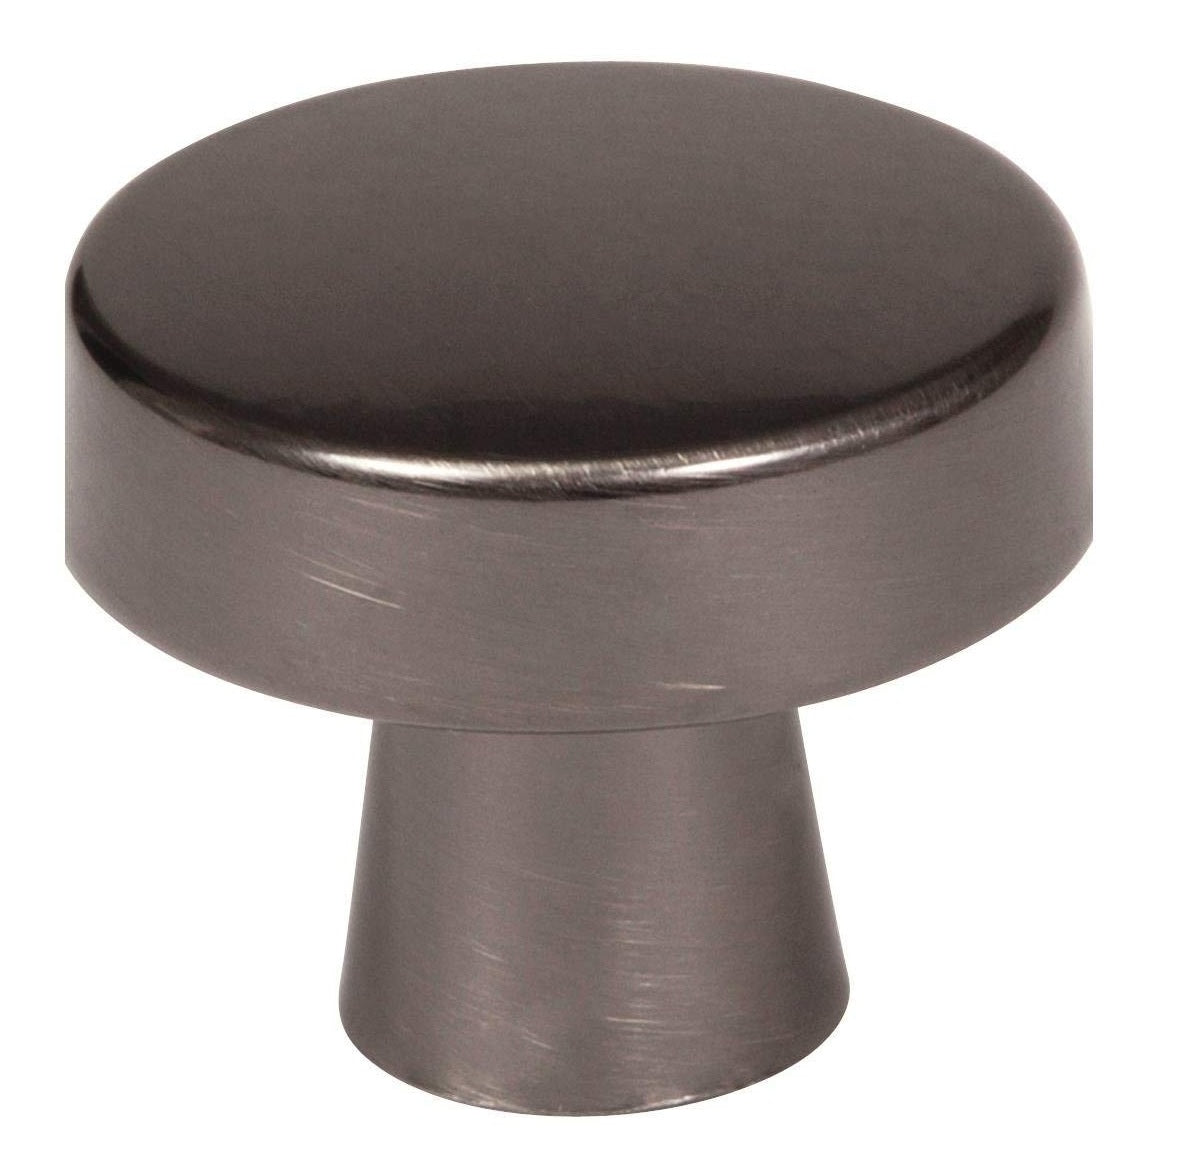 buy metal & cabinet knobs at cheap rate in bulk. wholesale & retail hardware repair kit store. home décor ideas, maintenance, repair replacement parts